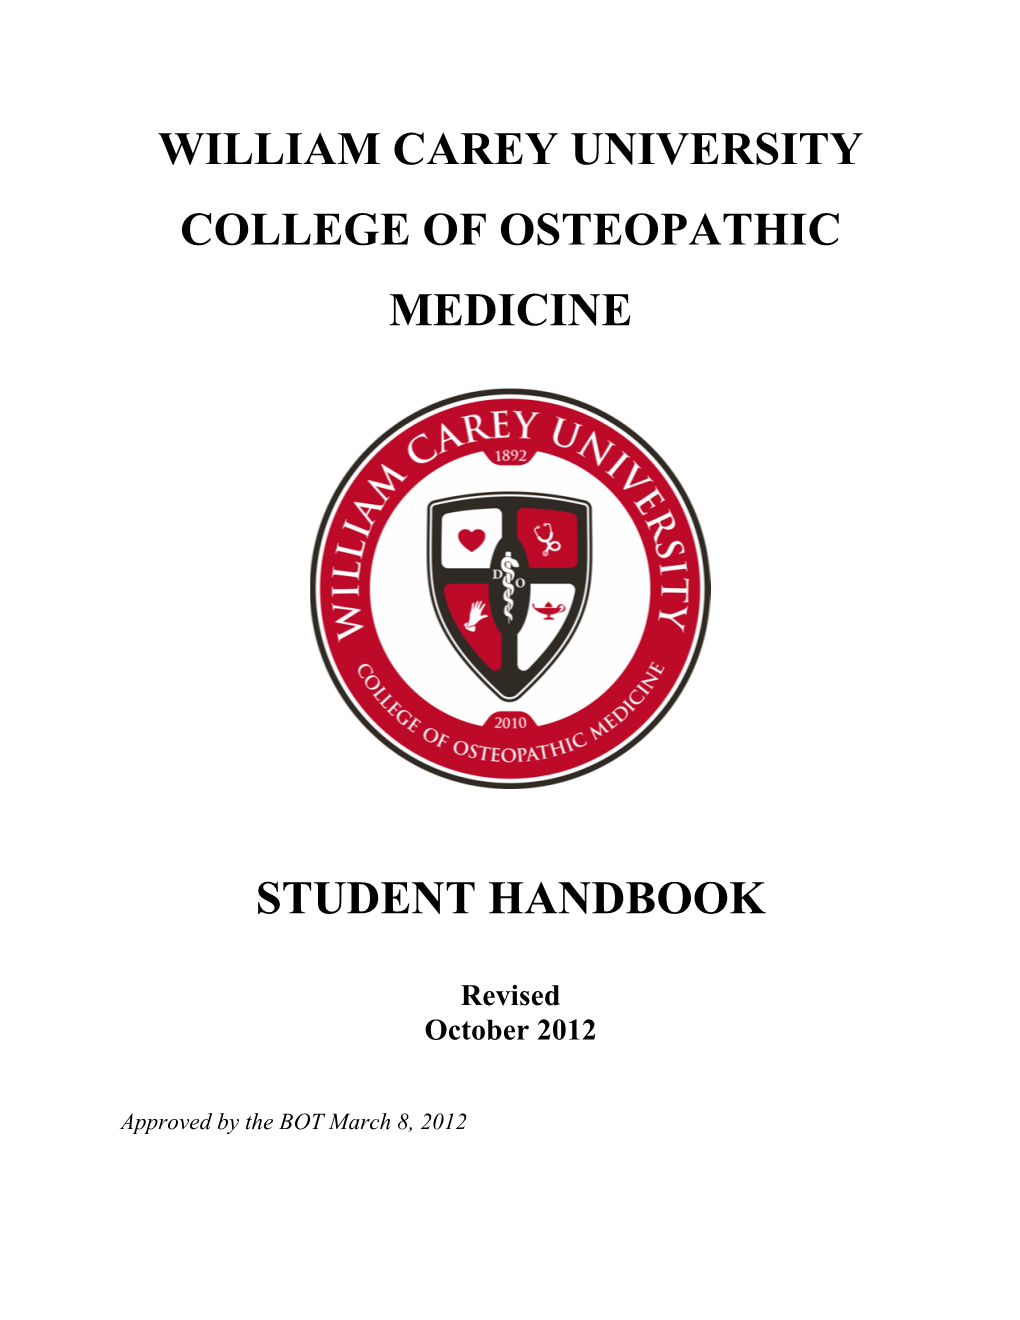 William Carey University College of Osteopathic Medicine Student Handbook